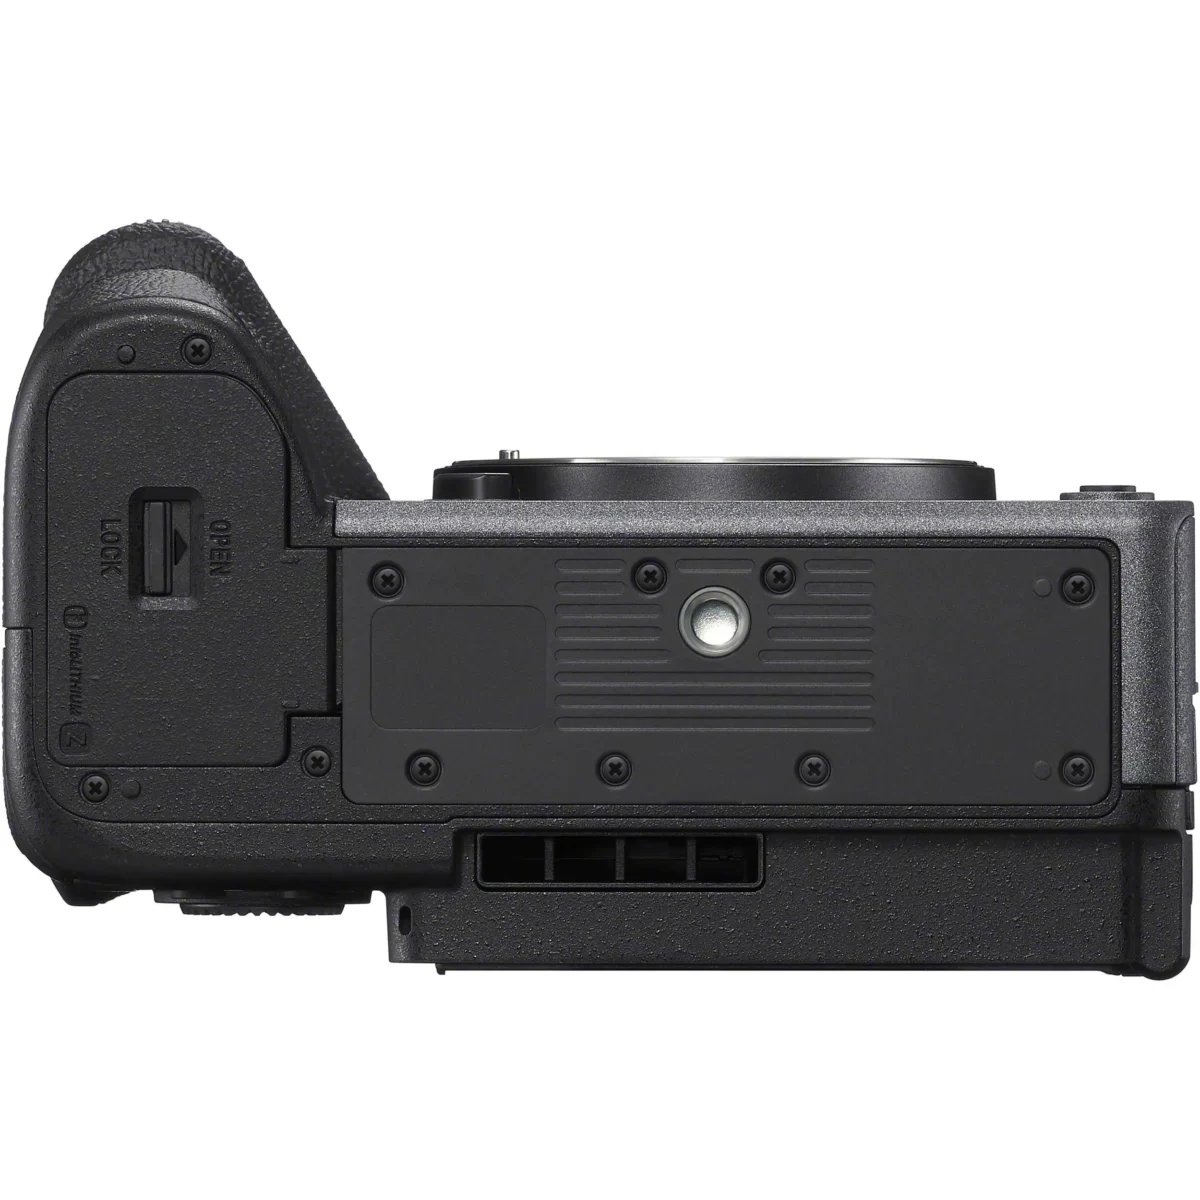 Sony FX30 Digital Cinema Camera Body Only 05